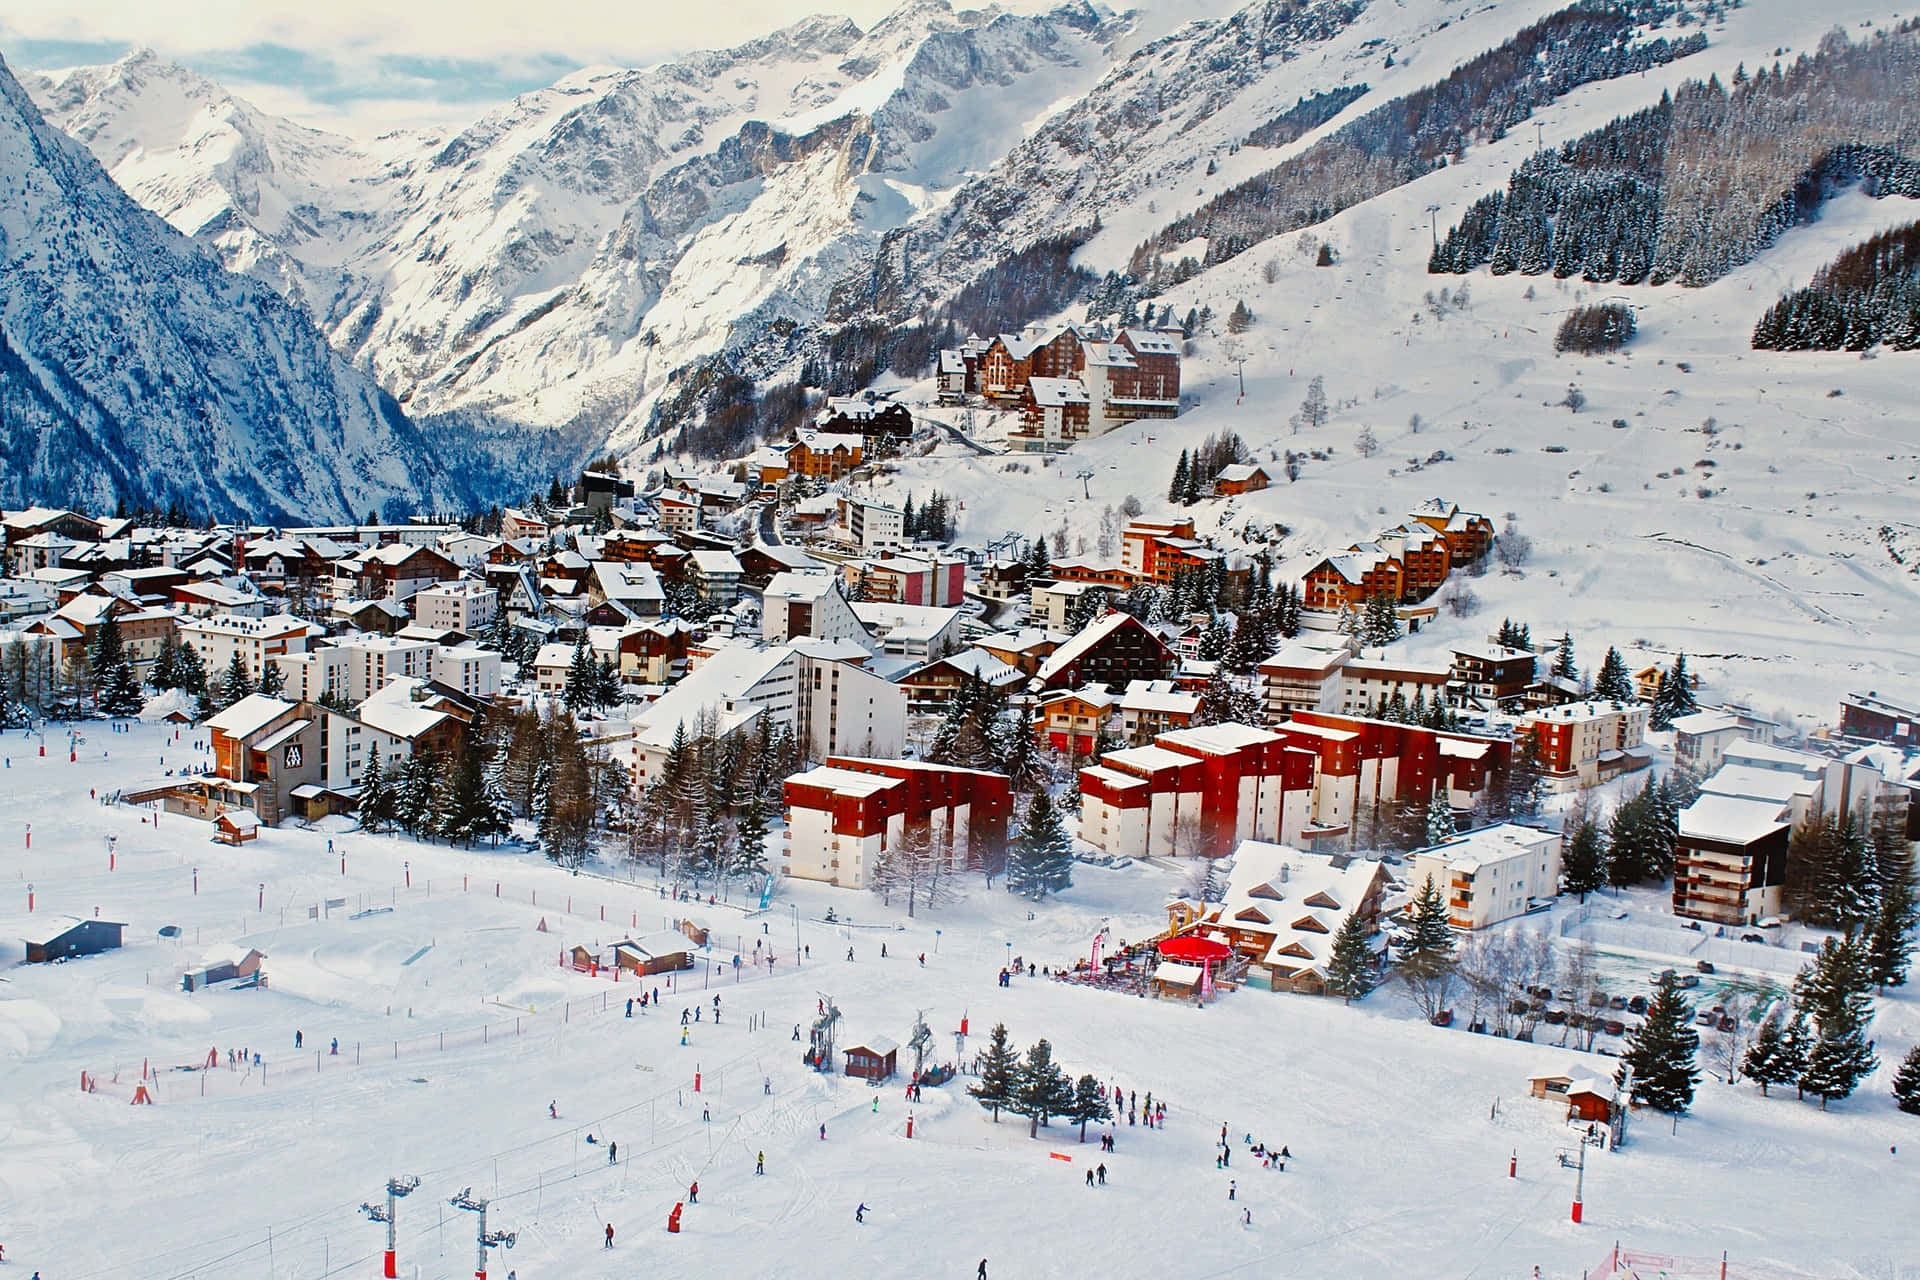 Captivating Ski Resort amidst Snowy Mountains Wallpaper